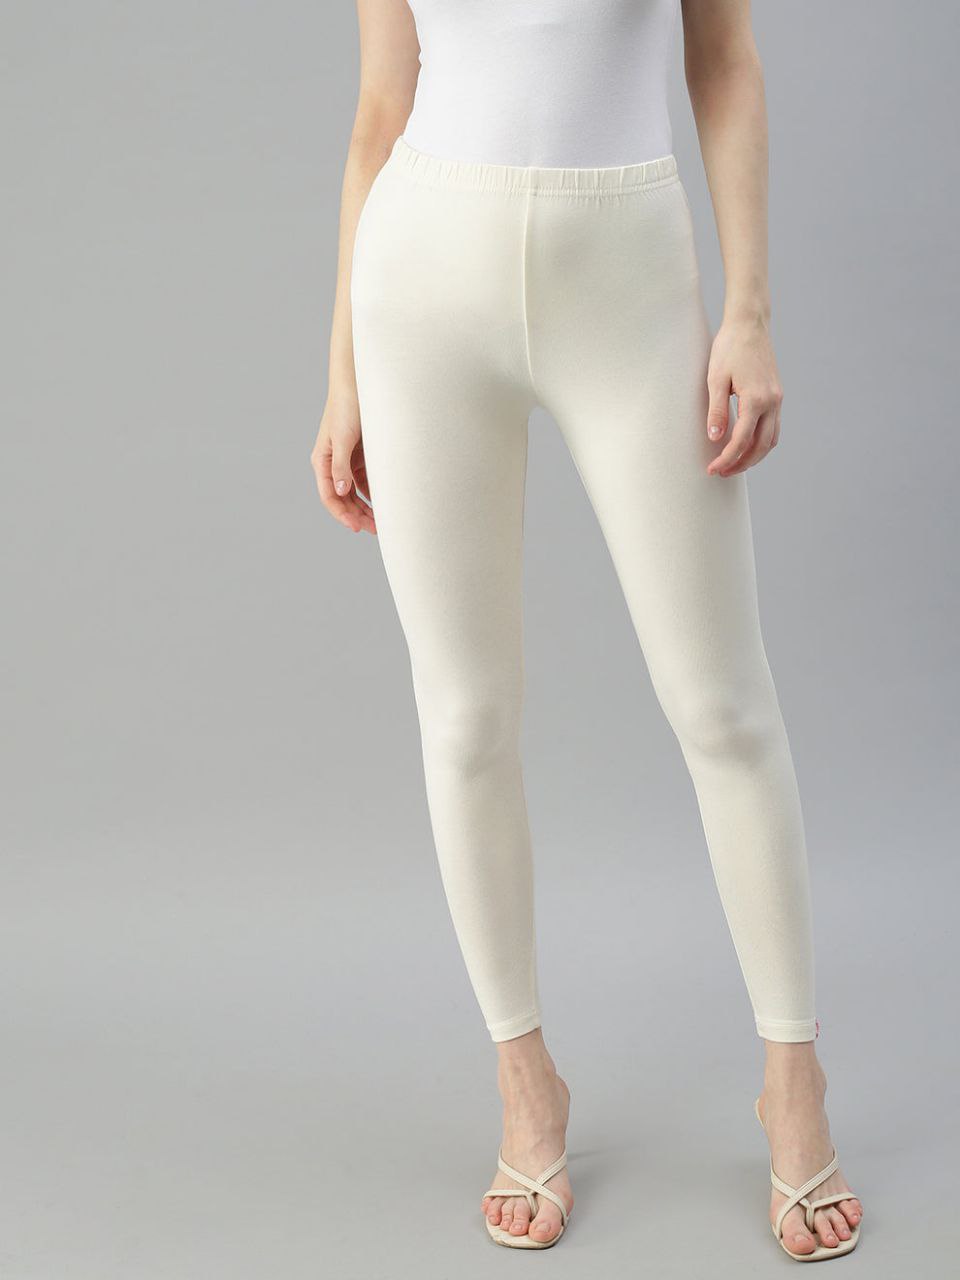 Gorgeous Cream Color Cotton Ankle Length Leggings For Women